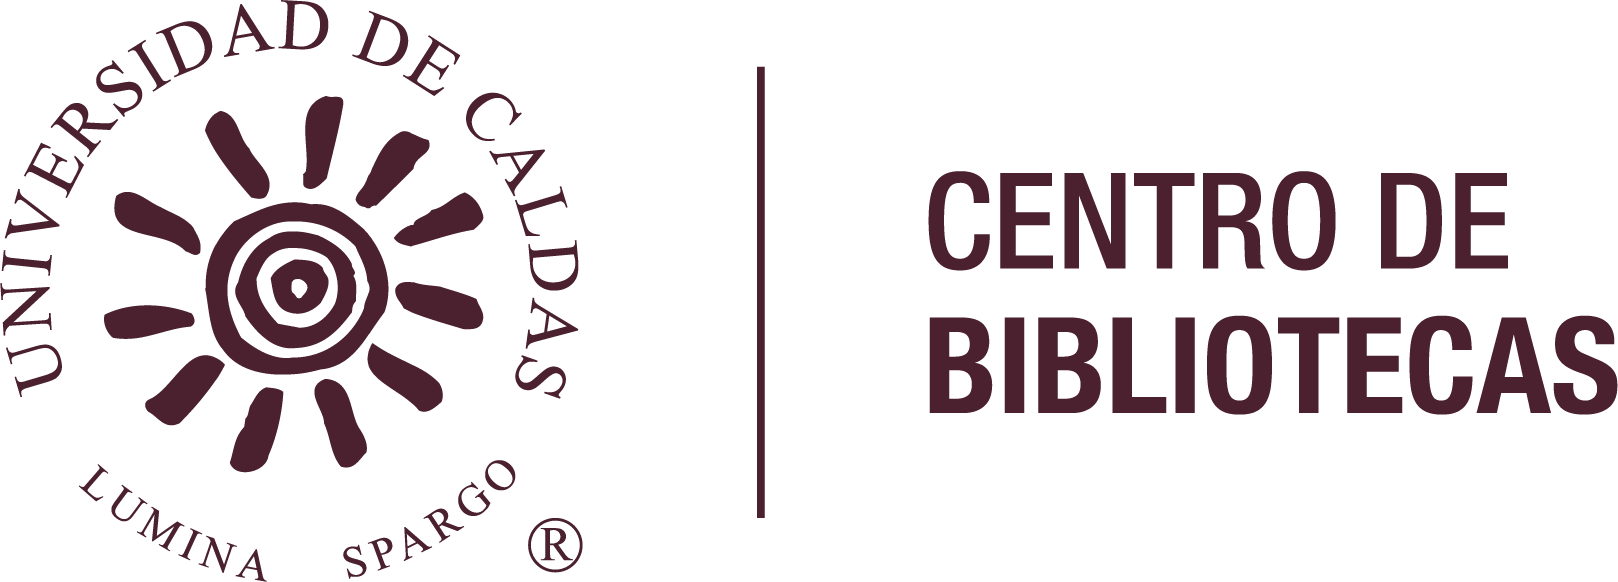 Logo de la universidas de caldas Centro de bibliotecas